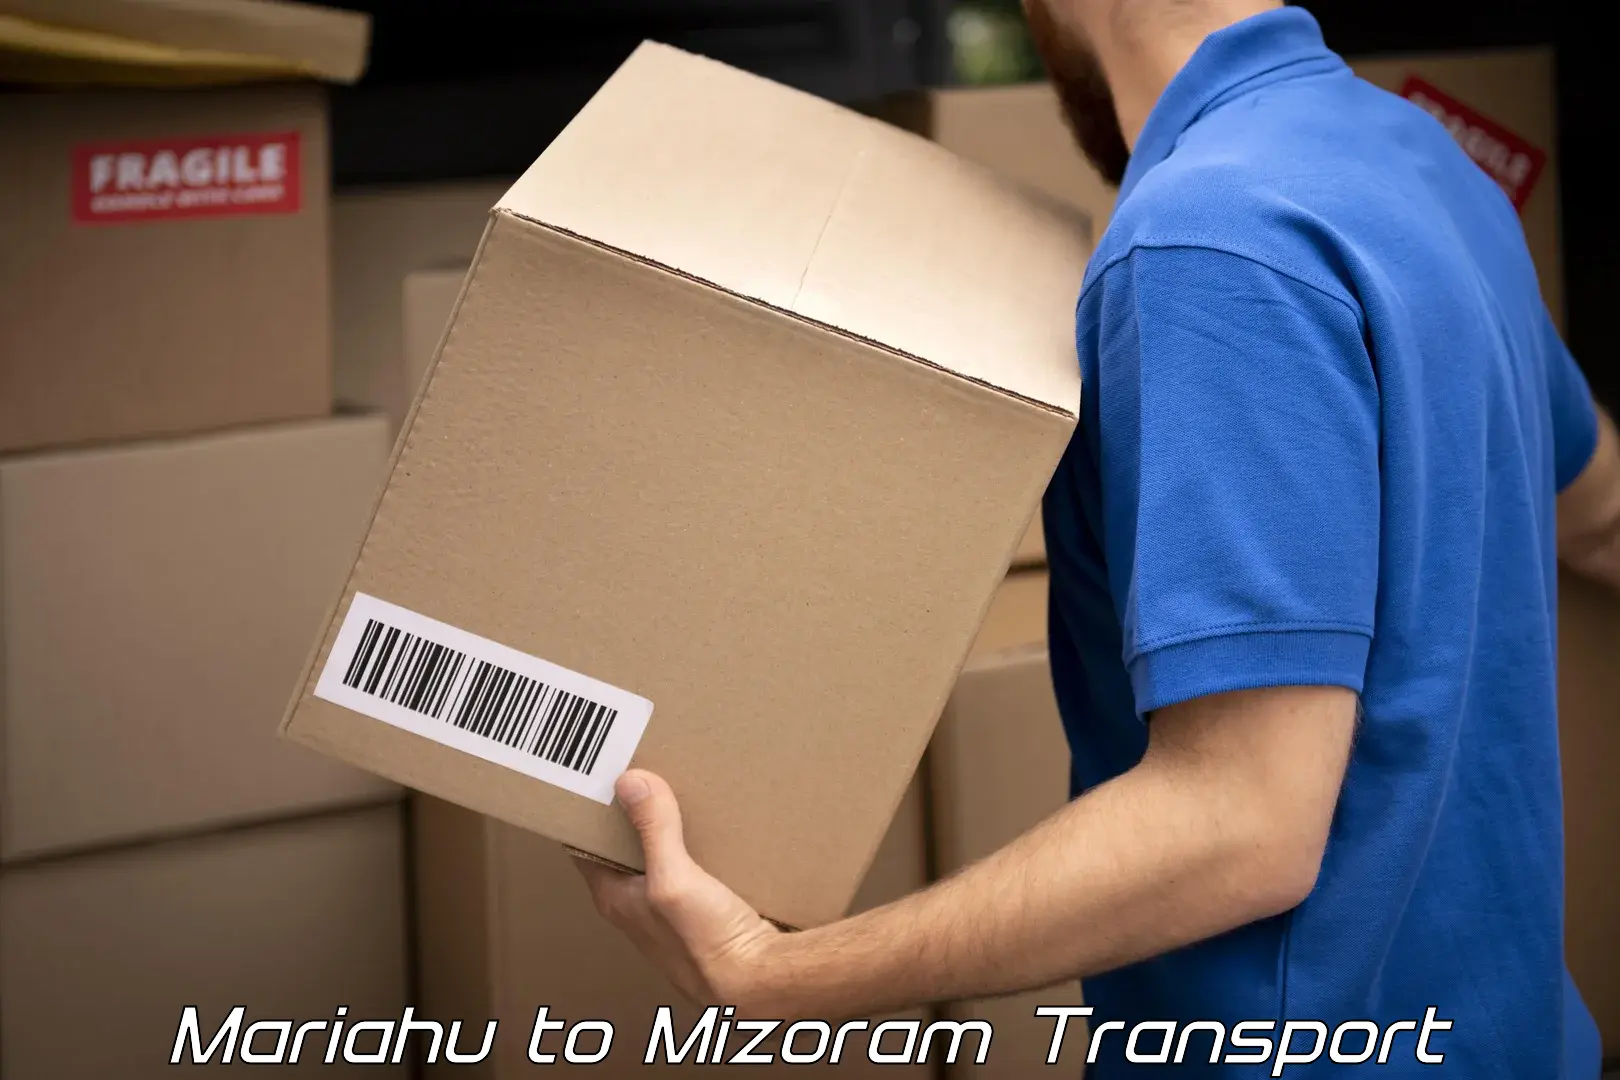 Shipping partner Mariahu to Mizoram